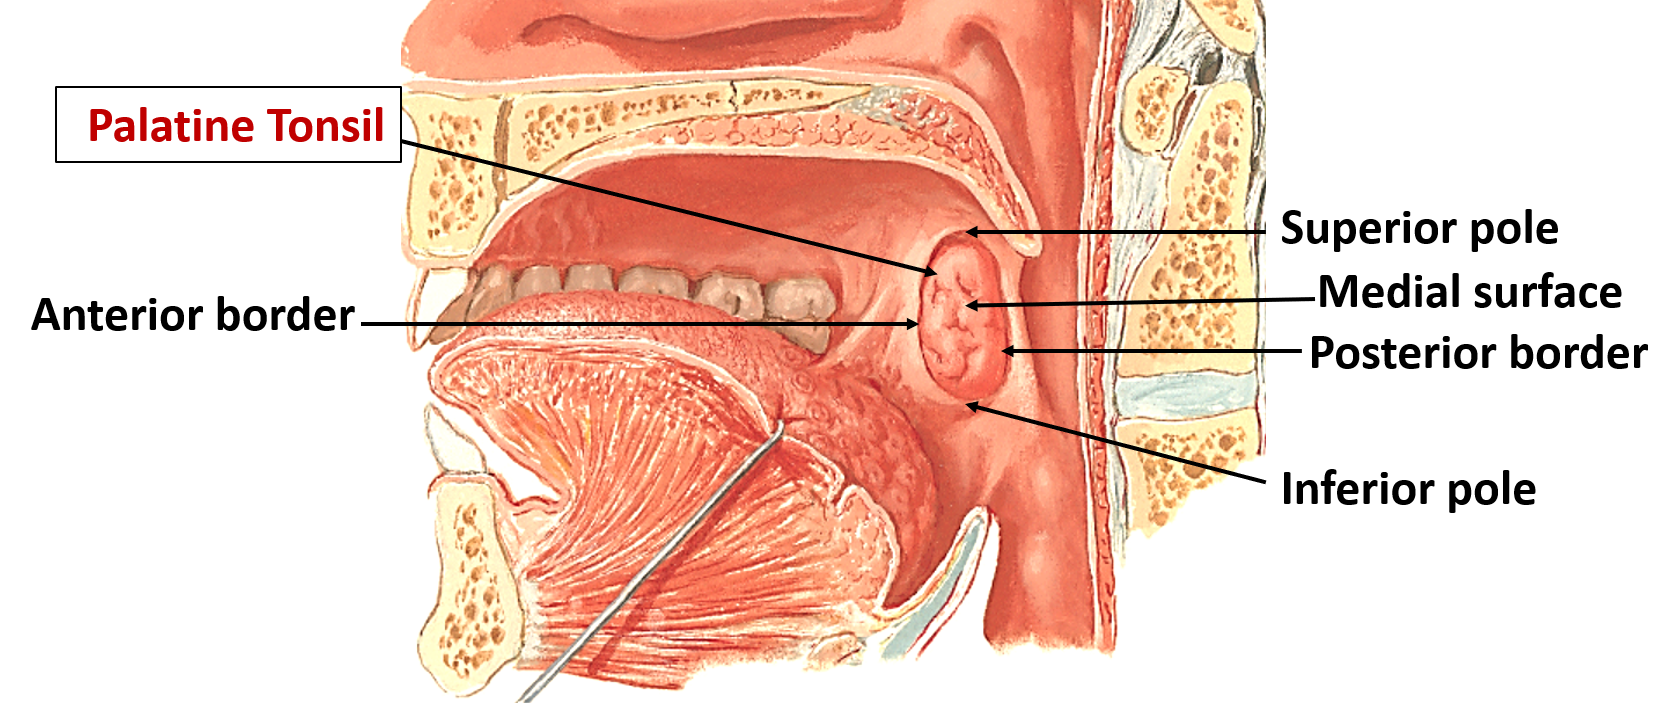 palatine tonsil-gross features